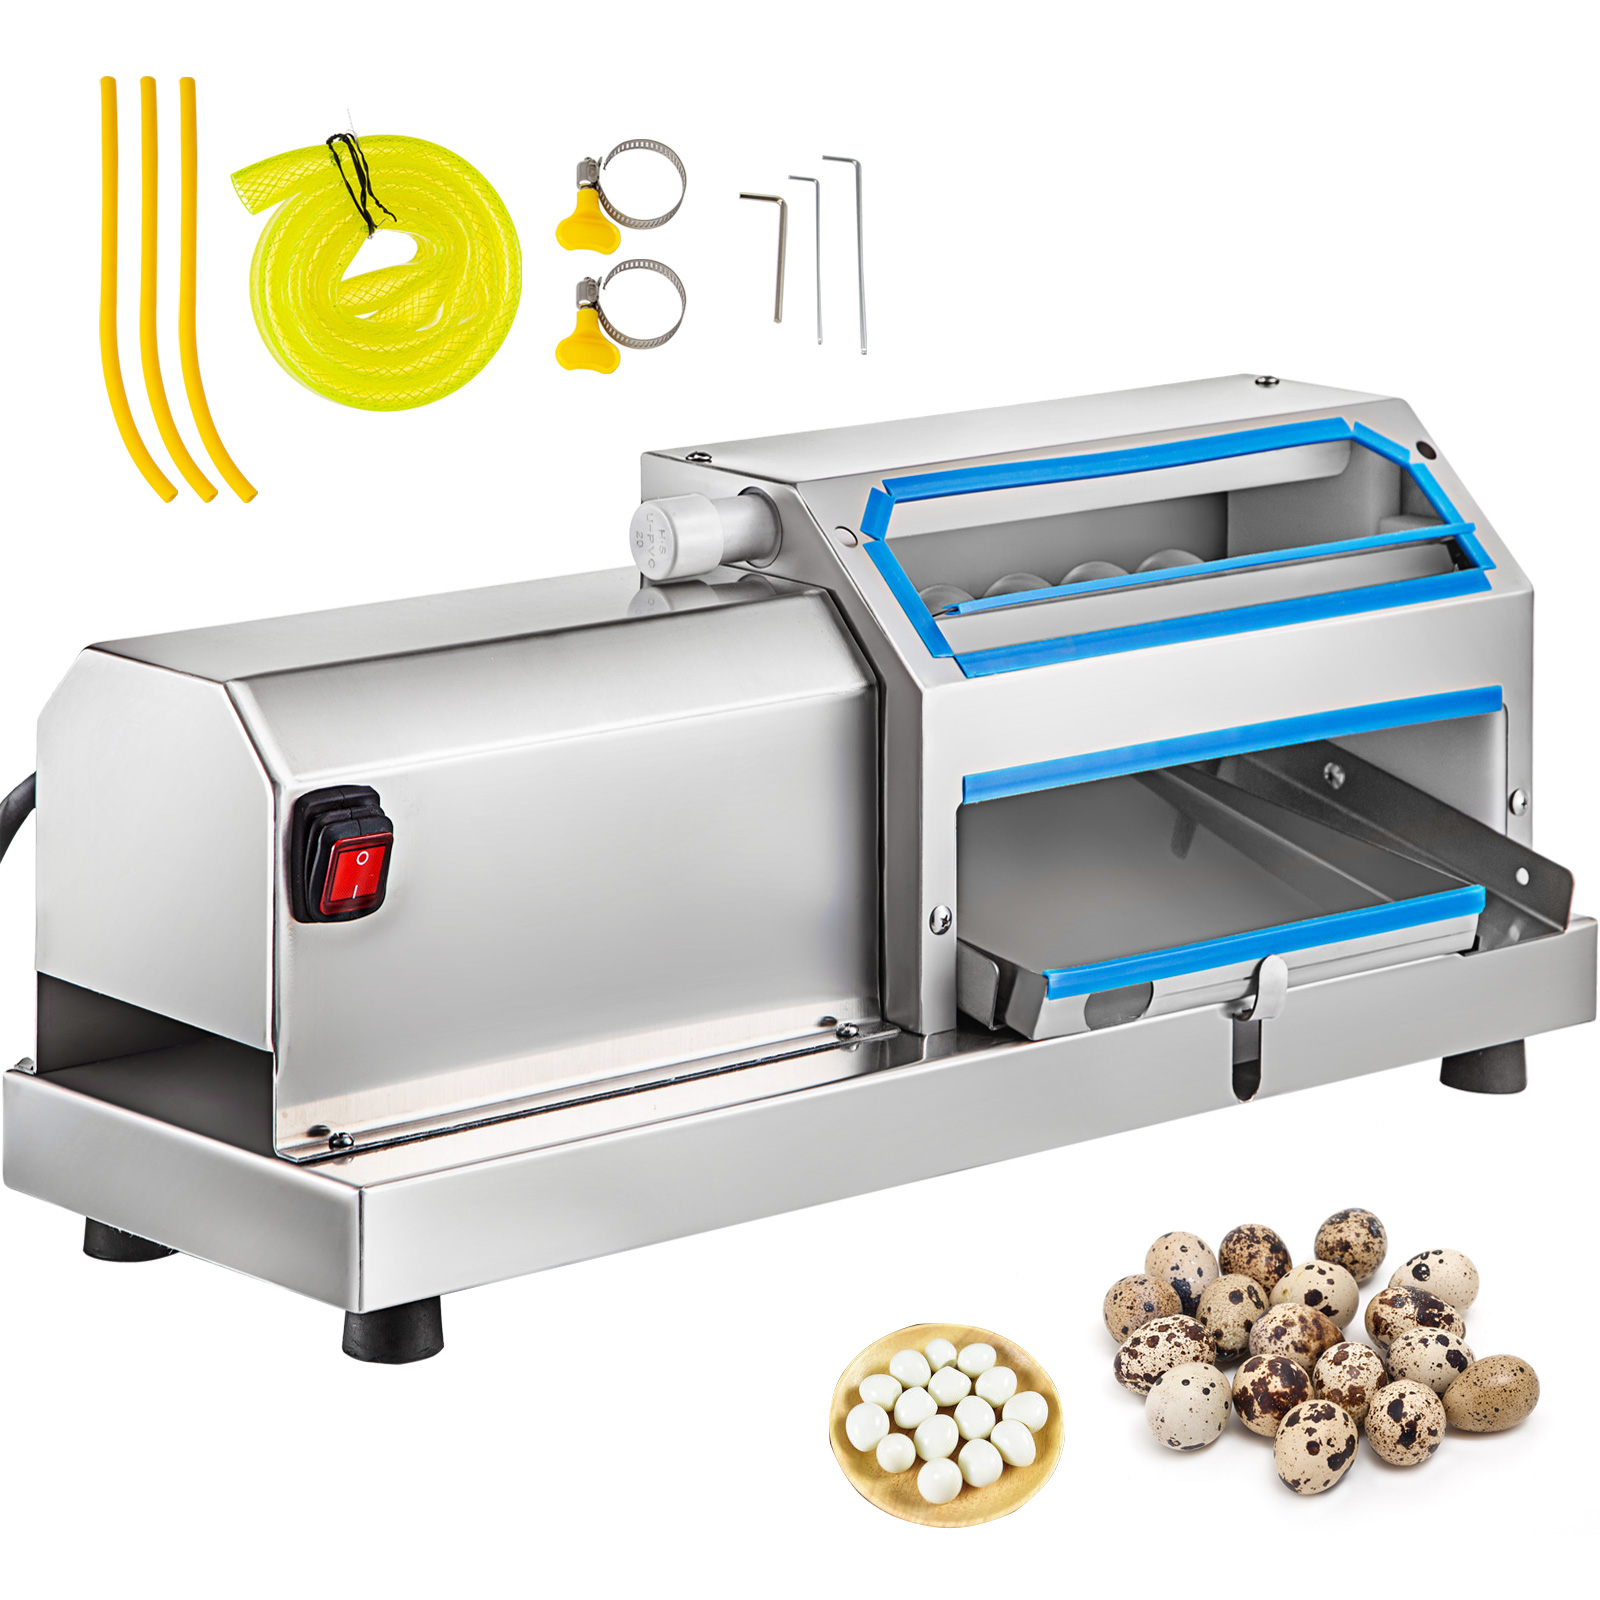 china quail egg peeler machine supplier